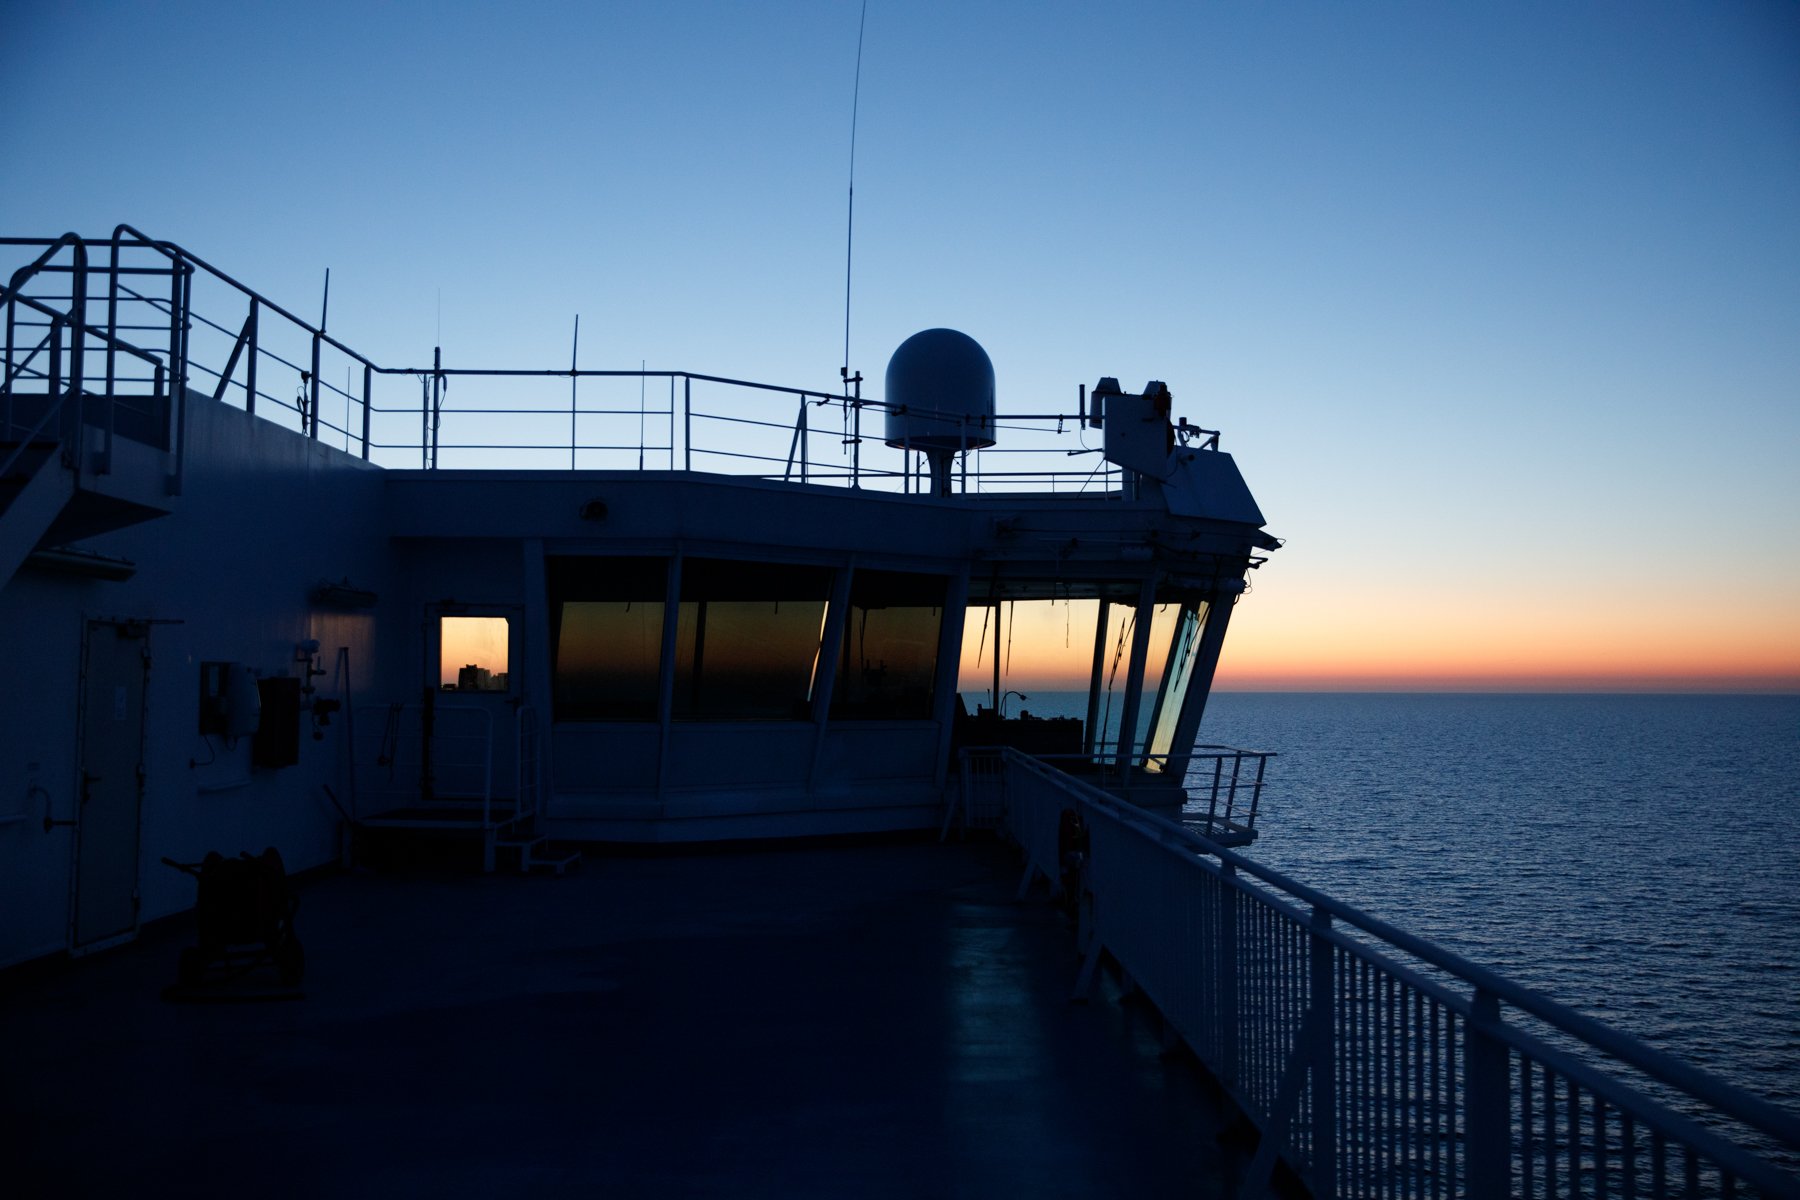   Finnlady  entering the Gulf of Finland at dawn. 